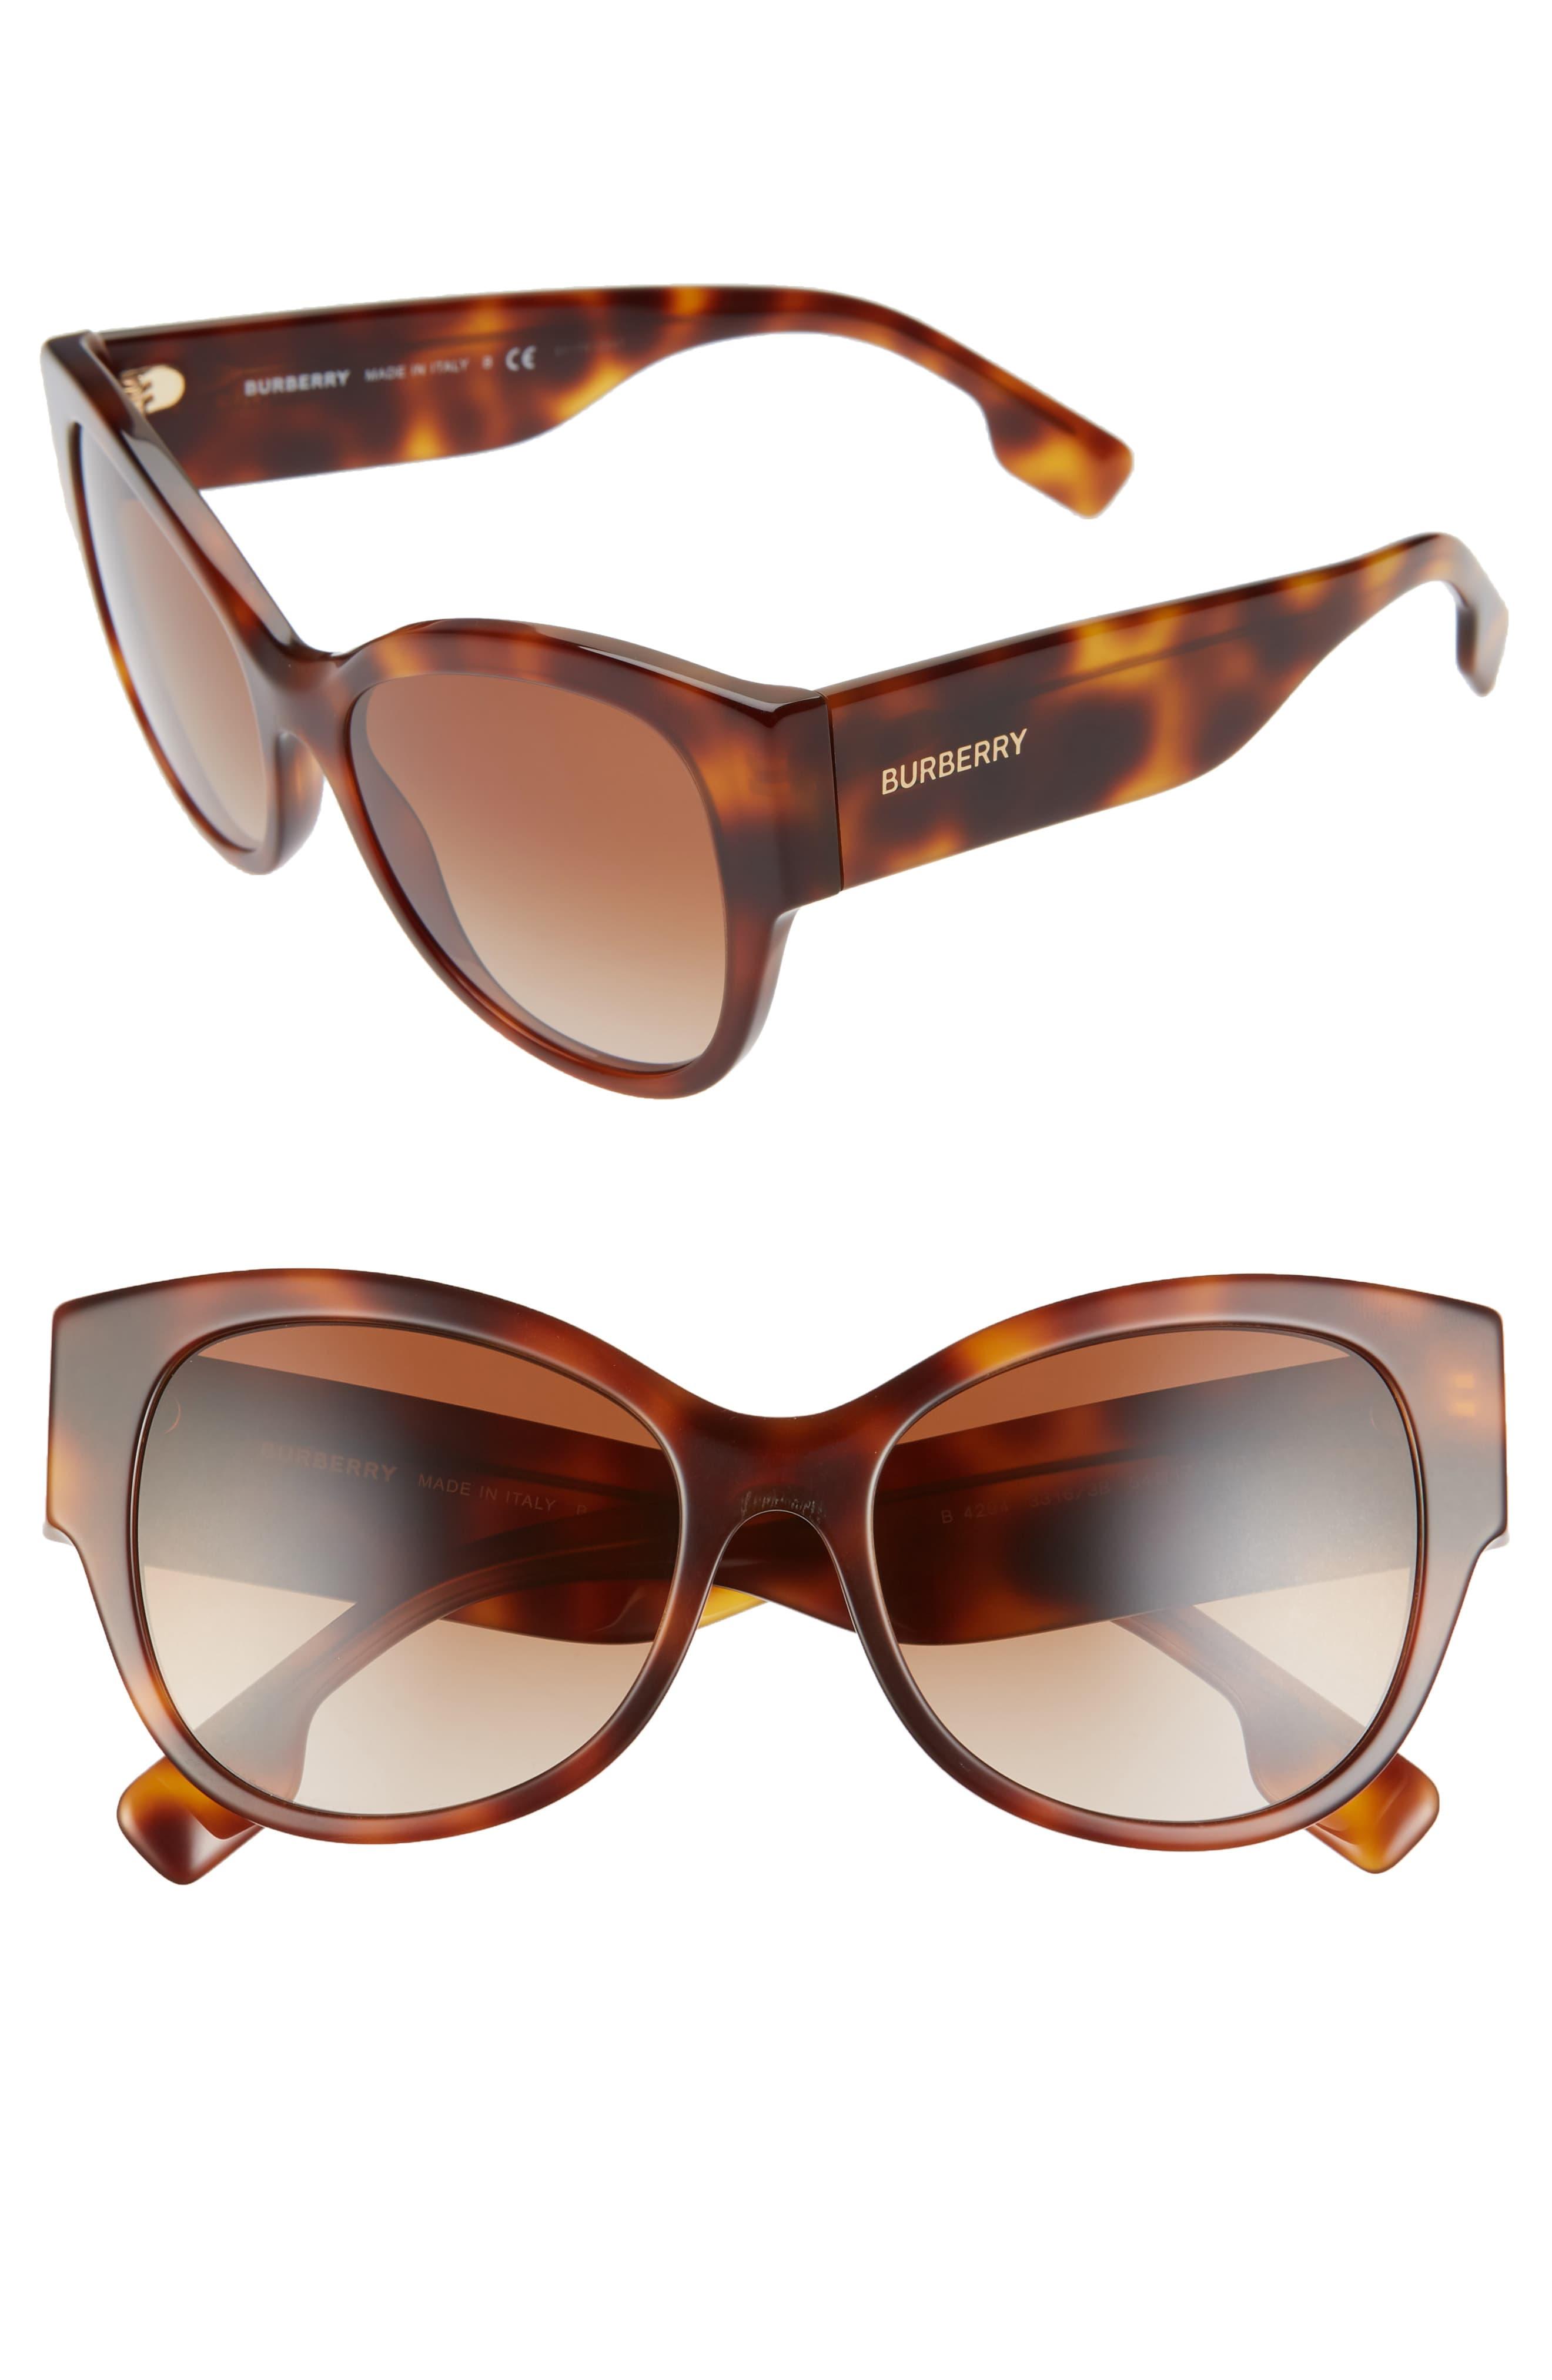 Burberry 54mm Butterfly Sunglasses - Light Havana/ Brown Gradient in ...